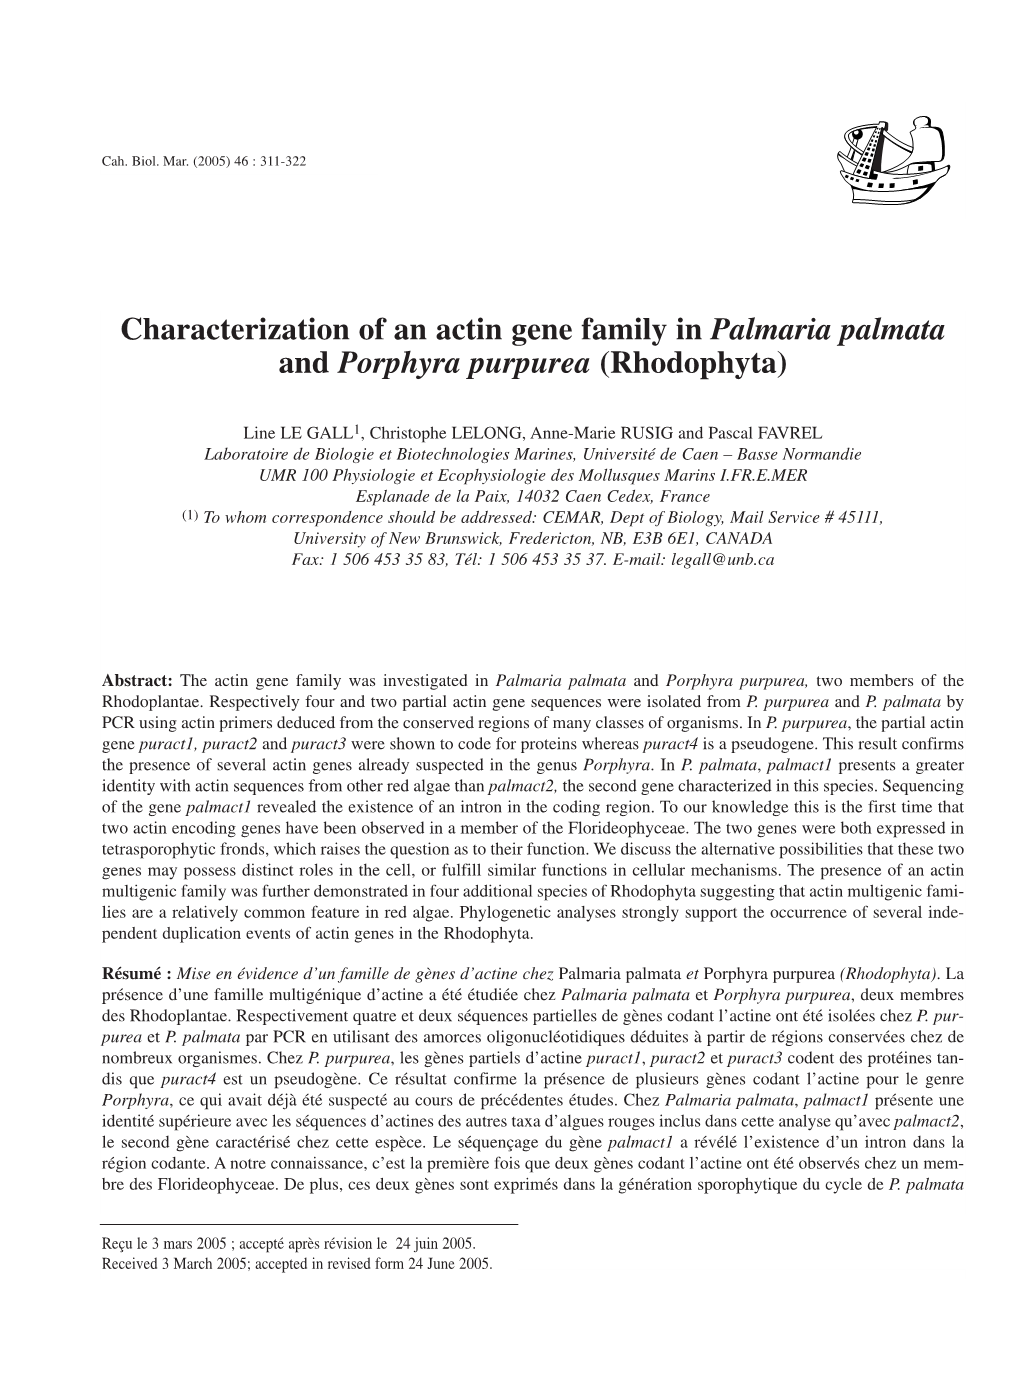 Characterization of an Actin Gene Family in Palmaria Palmata and Porphyra Purpurea (Rhodophyta)